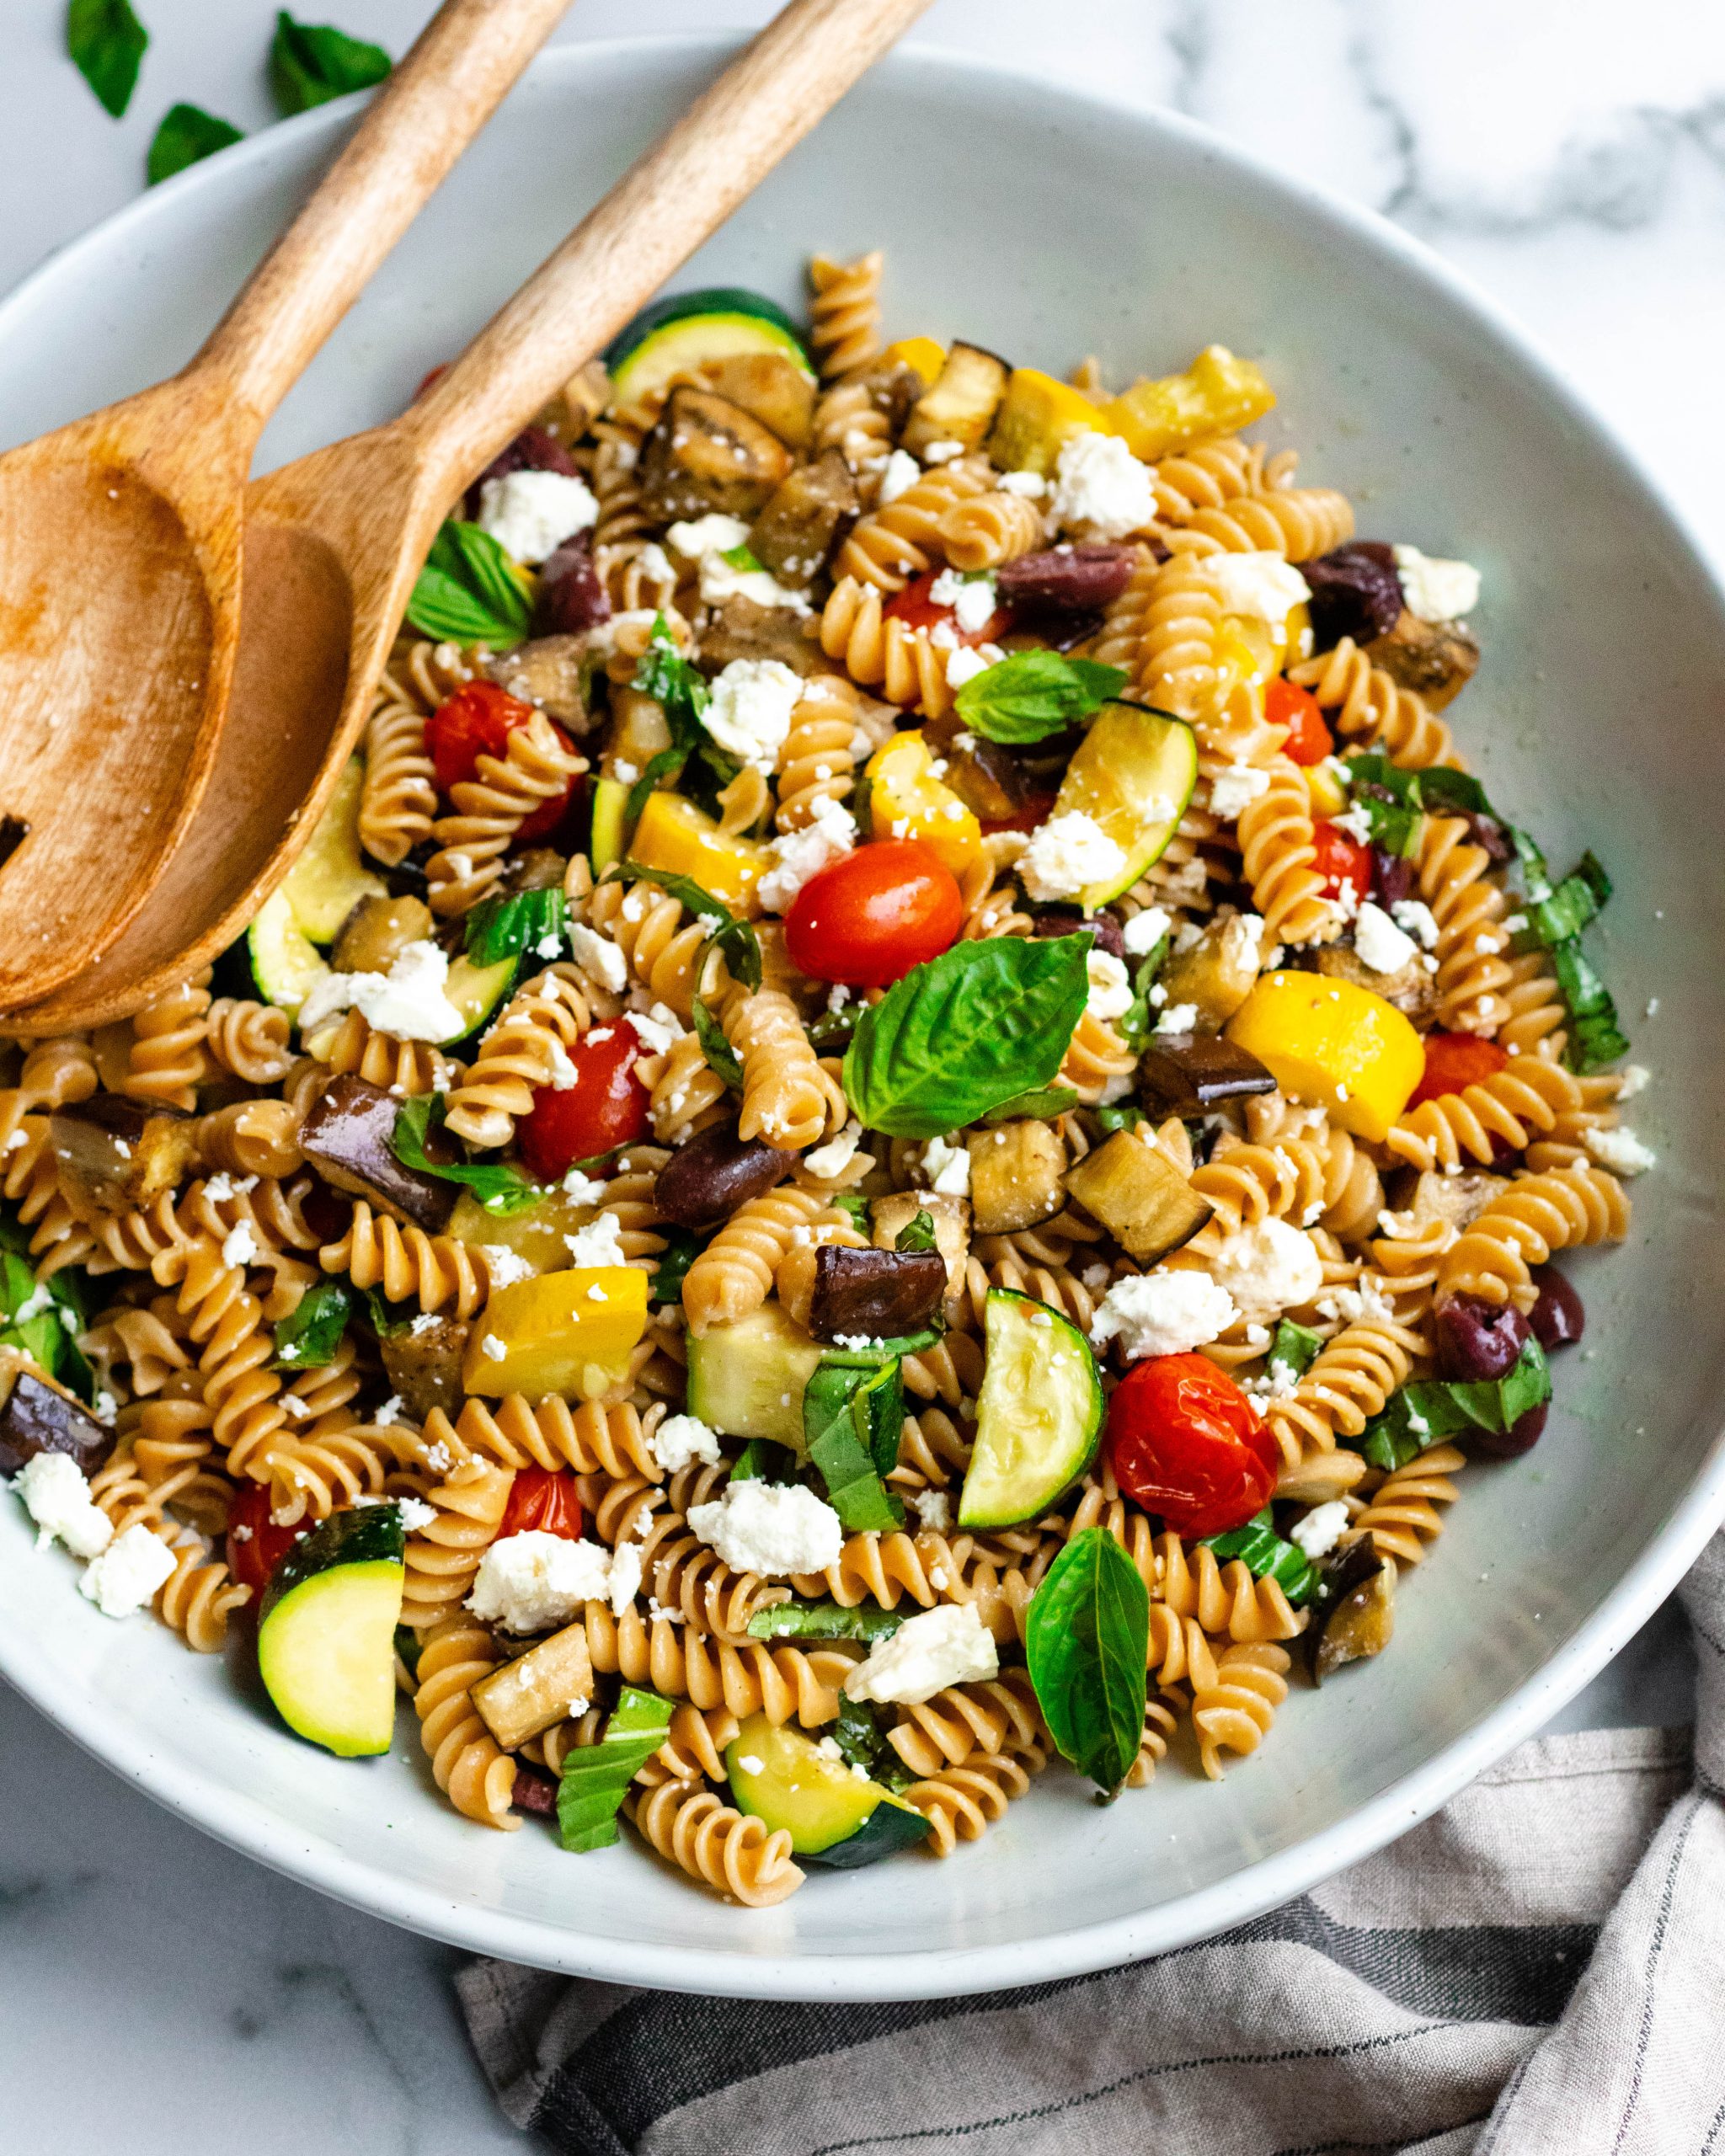 healthy vegetarian pasta salad recipes Pasta pesto salad recipe easy ...